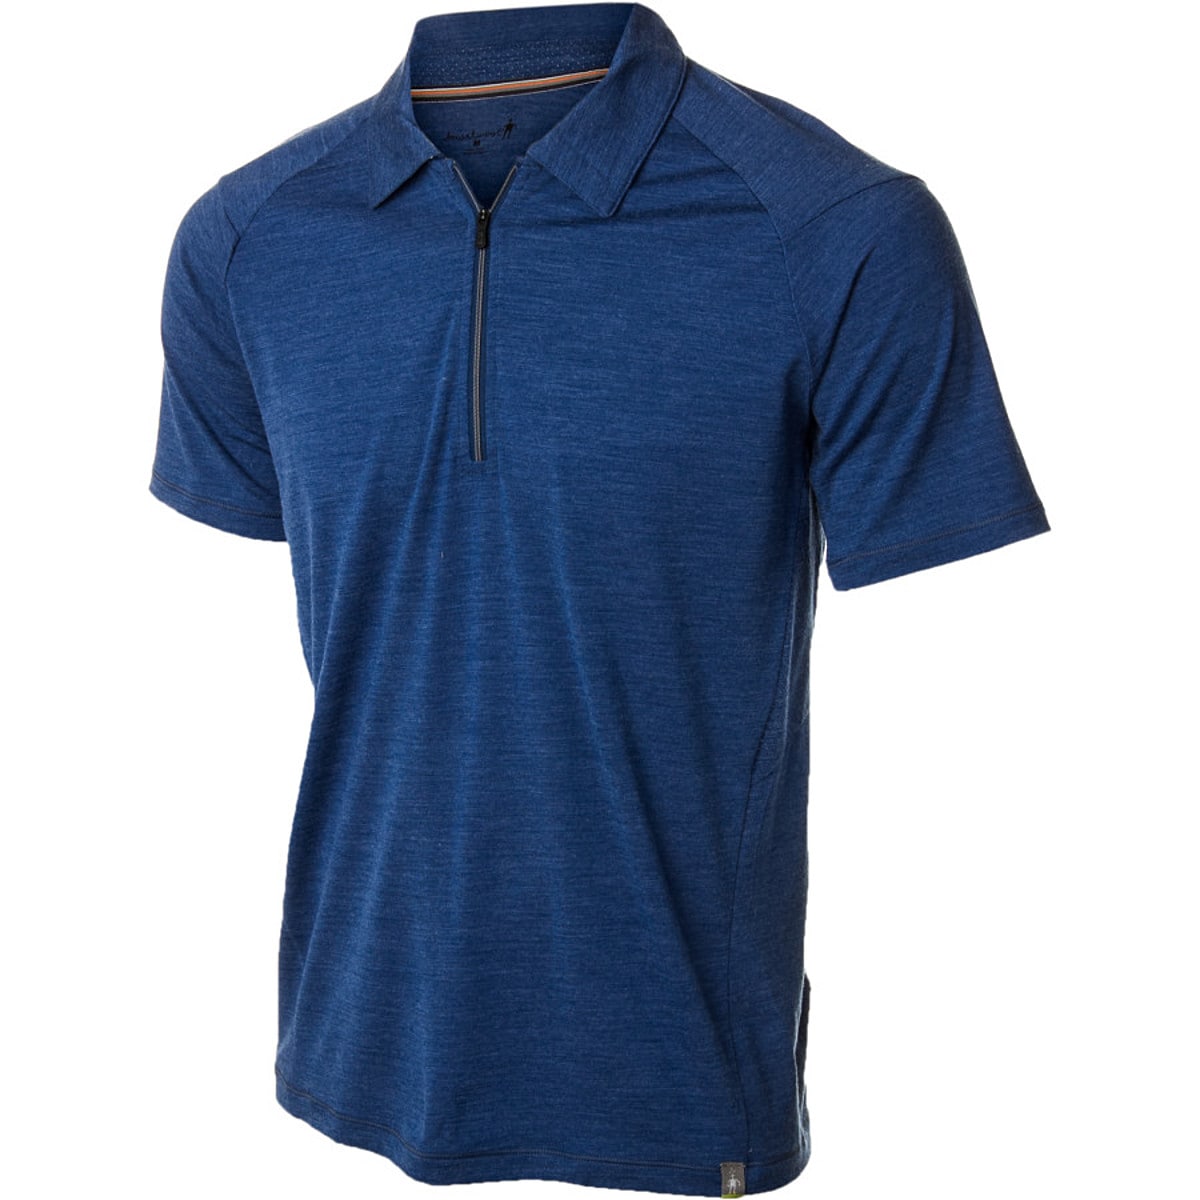 Smartwool Teller Zip Polo Shirt - Men's - Clothing